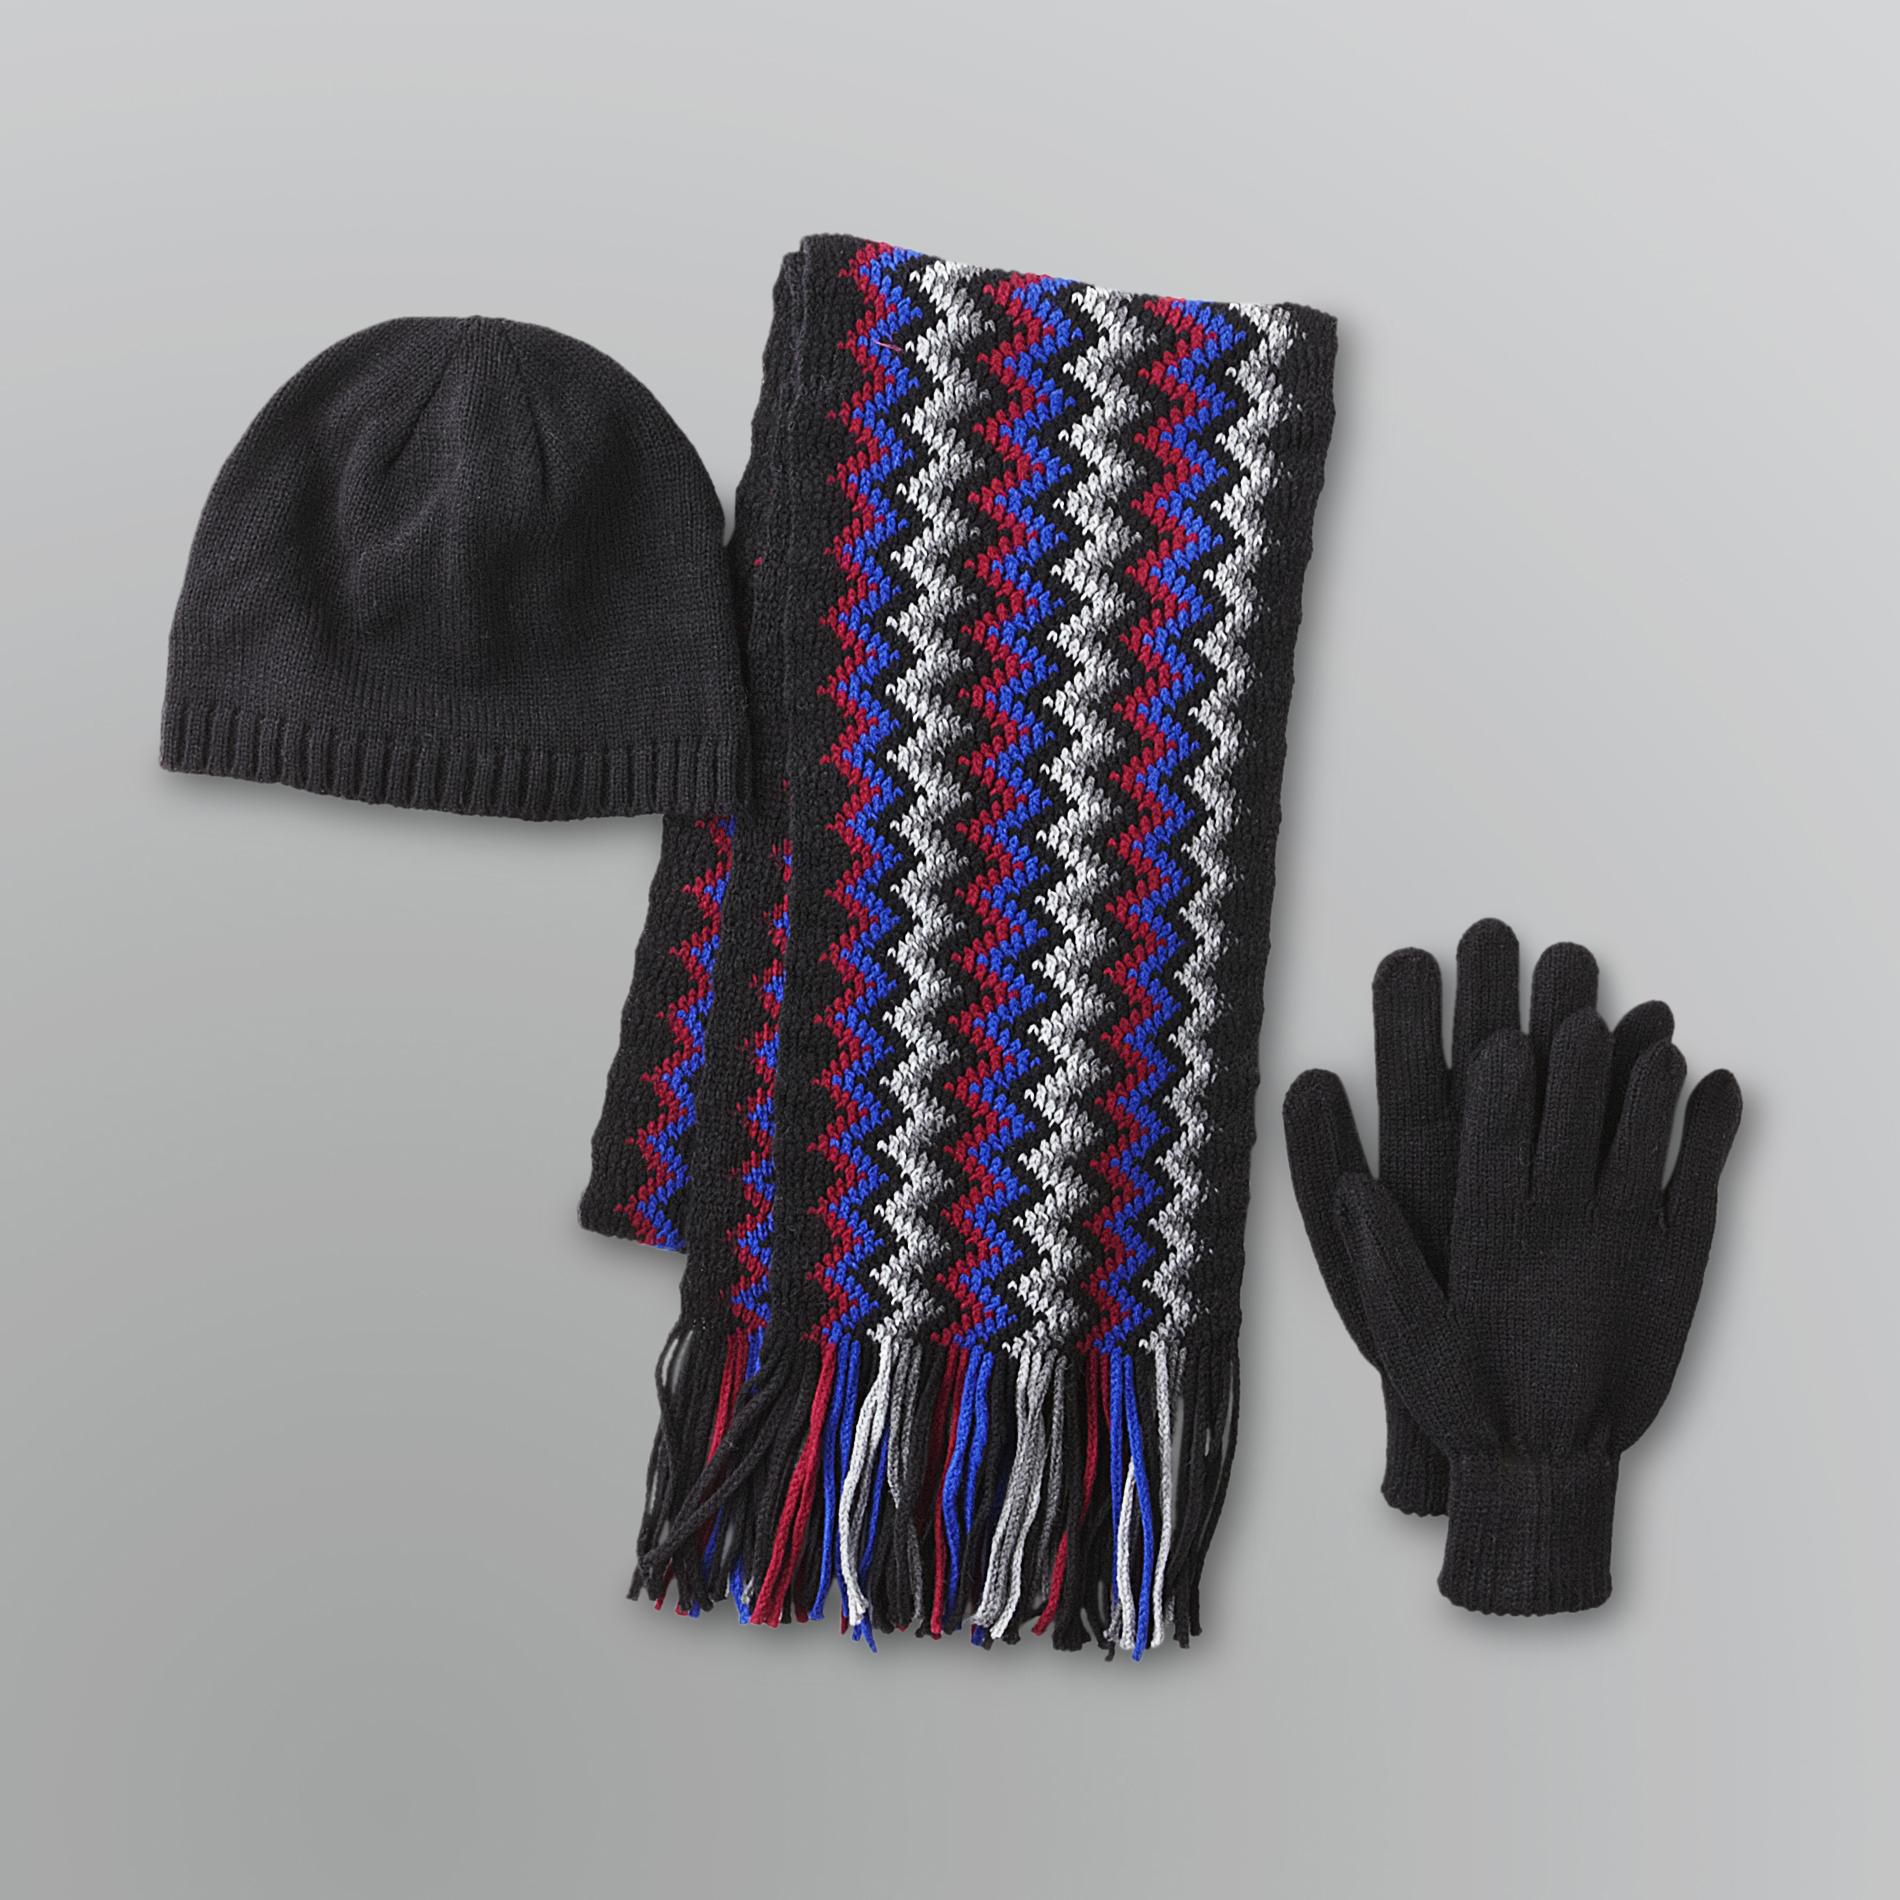 Joe Boxer Women's Knit Hat  Gloves & Scarf Gift Set